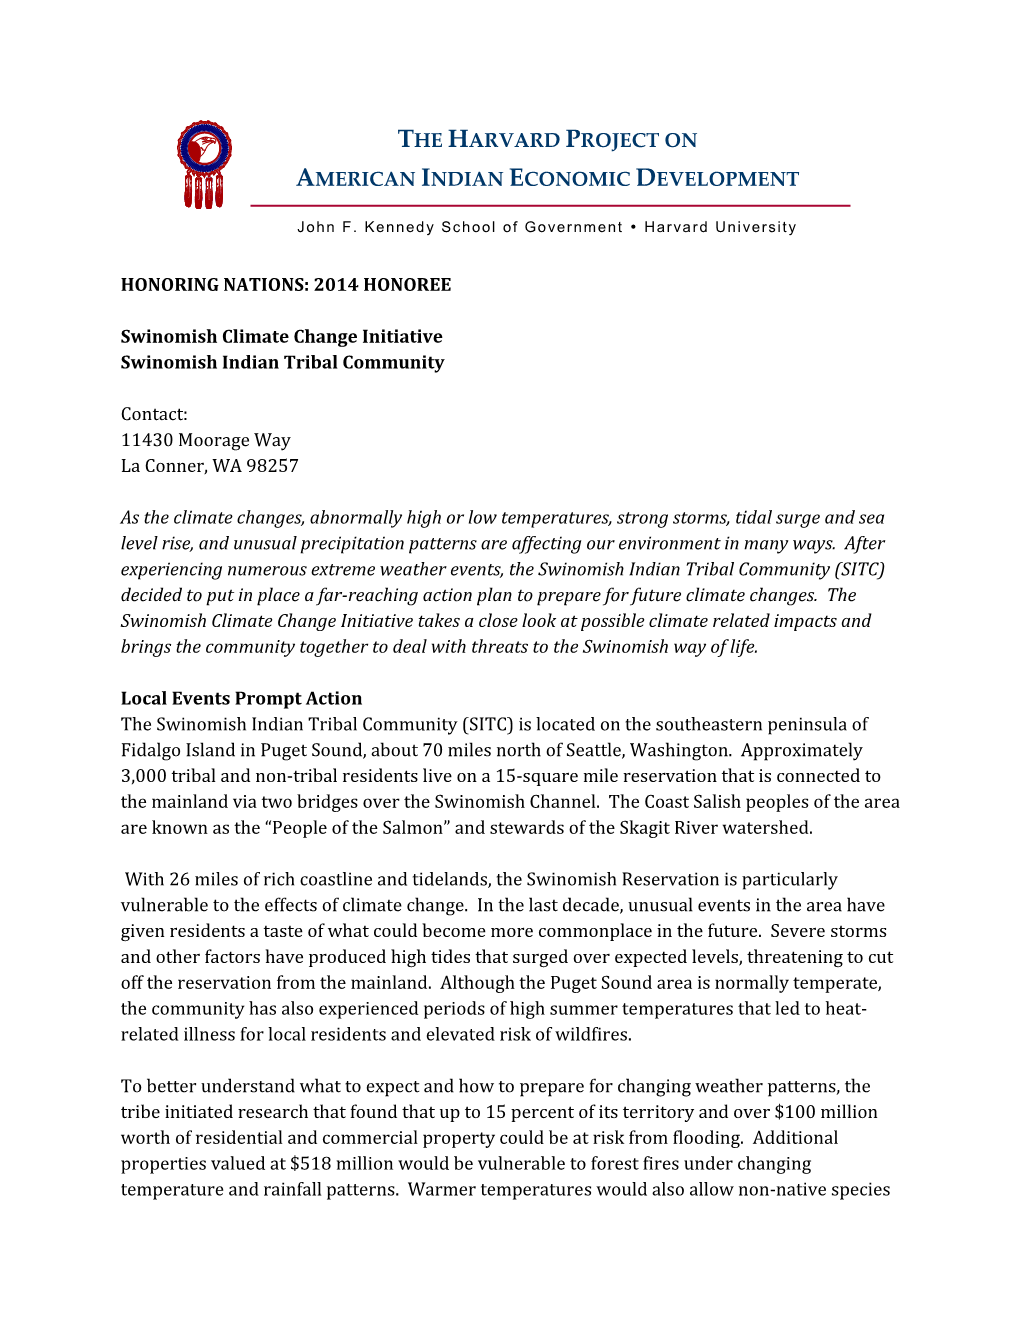 The Harvard Project on American Indian Economic Development |